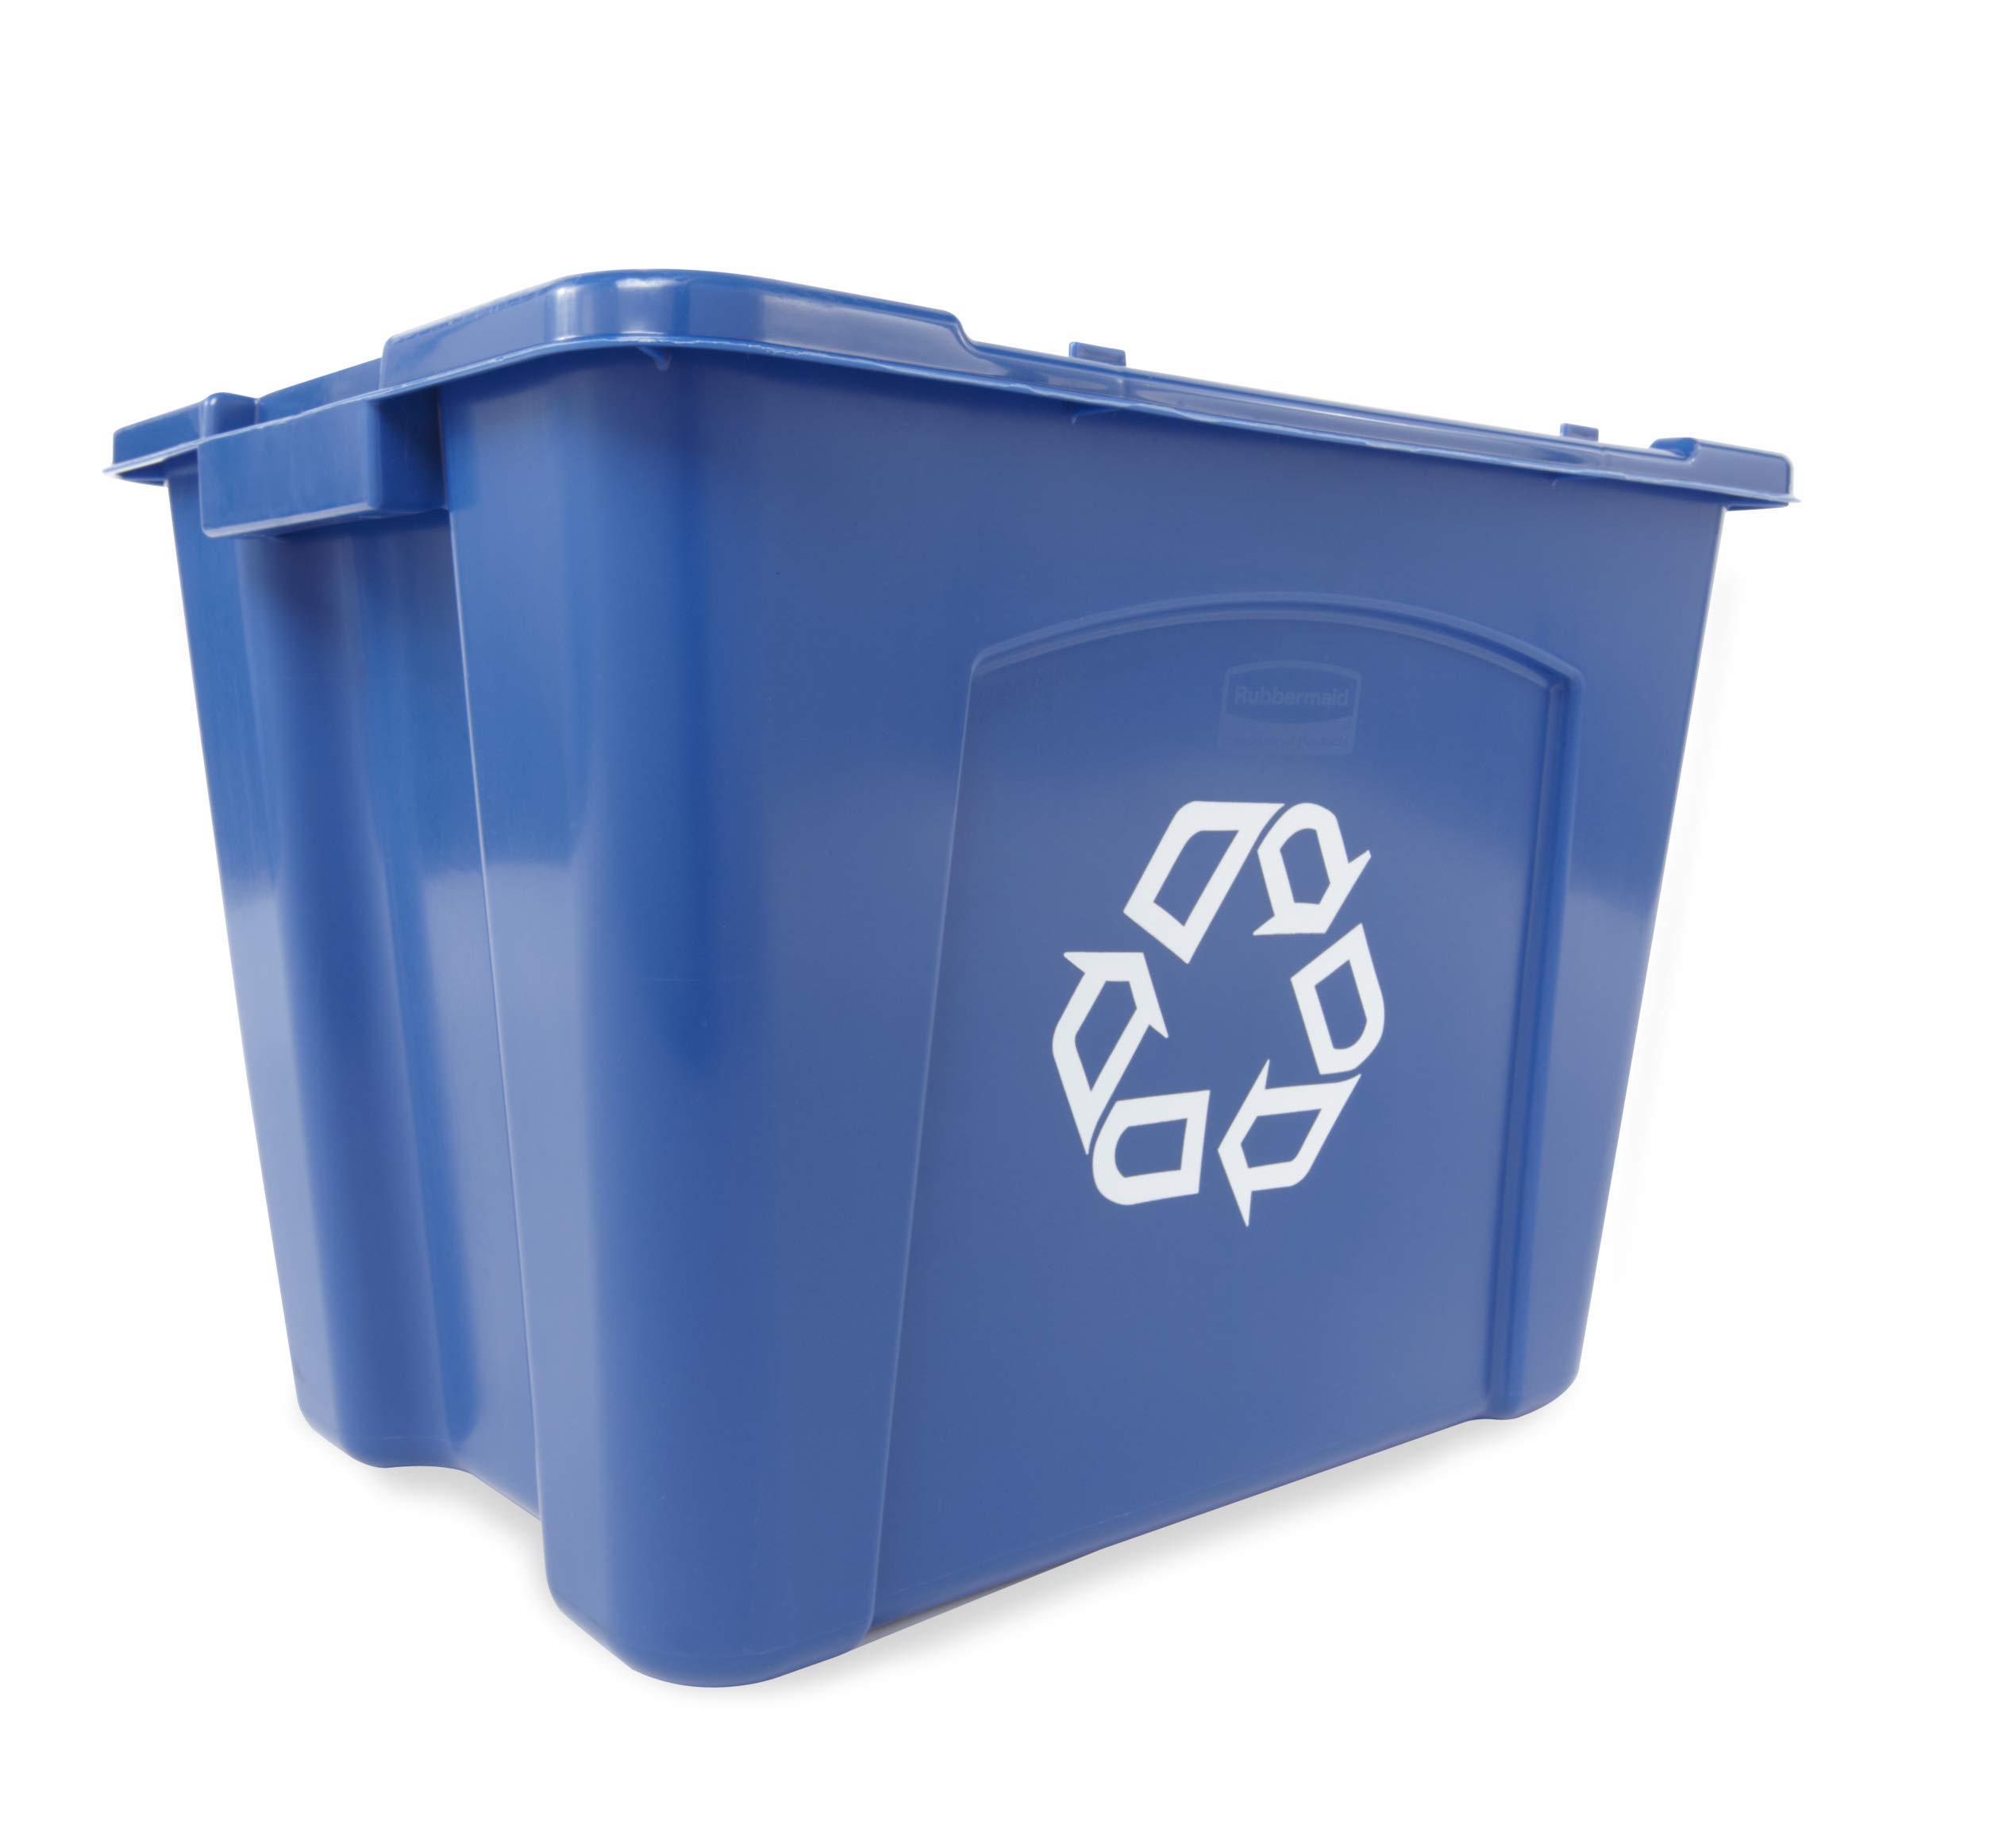 Rubbermaid Stapelbarer Recyclingbehälter für kommerziel...